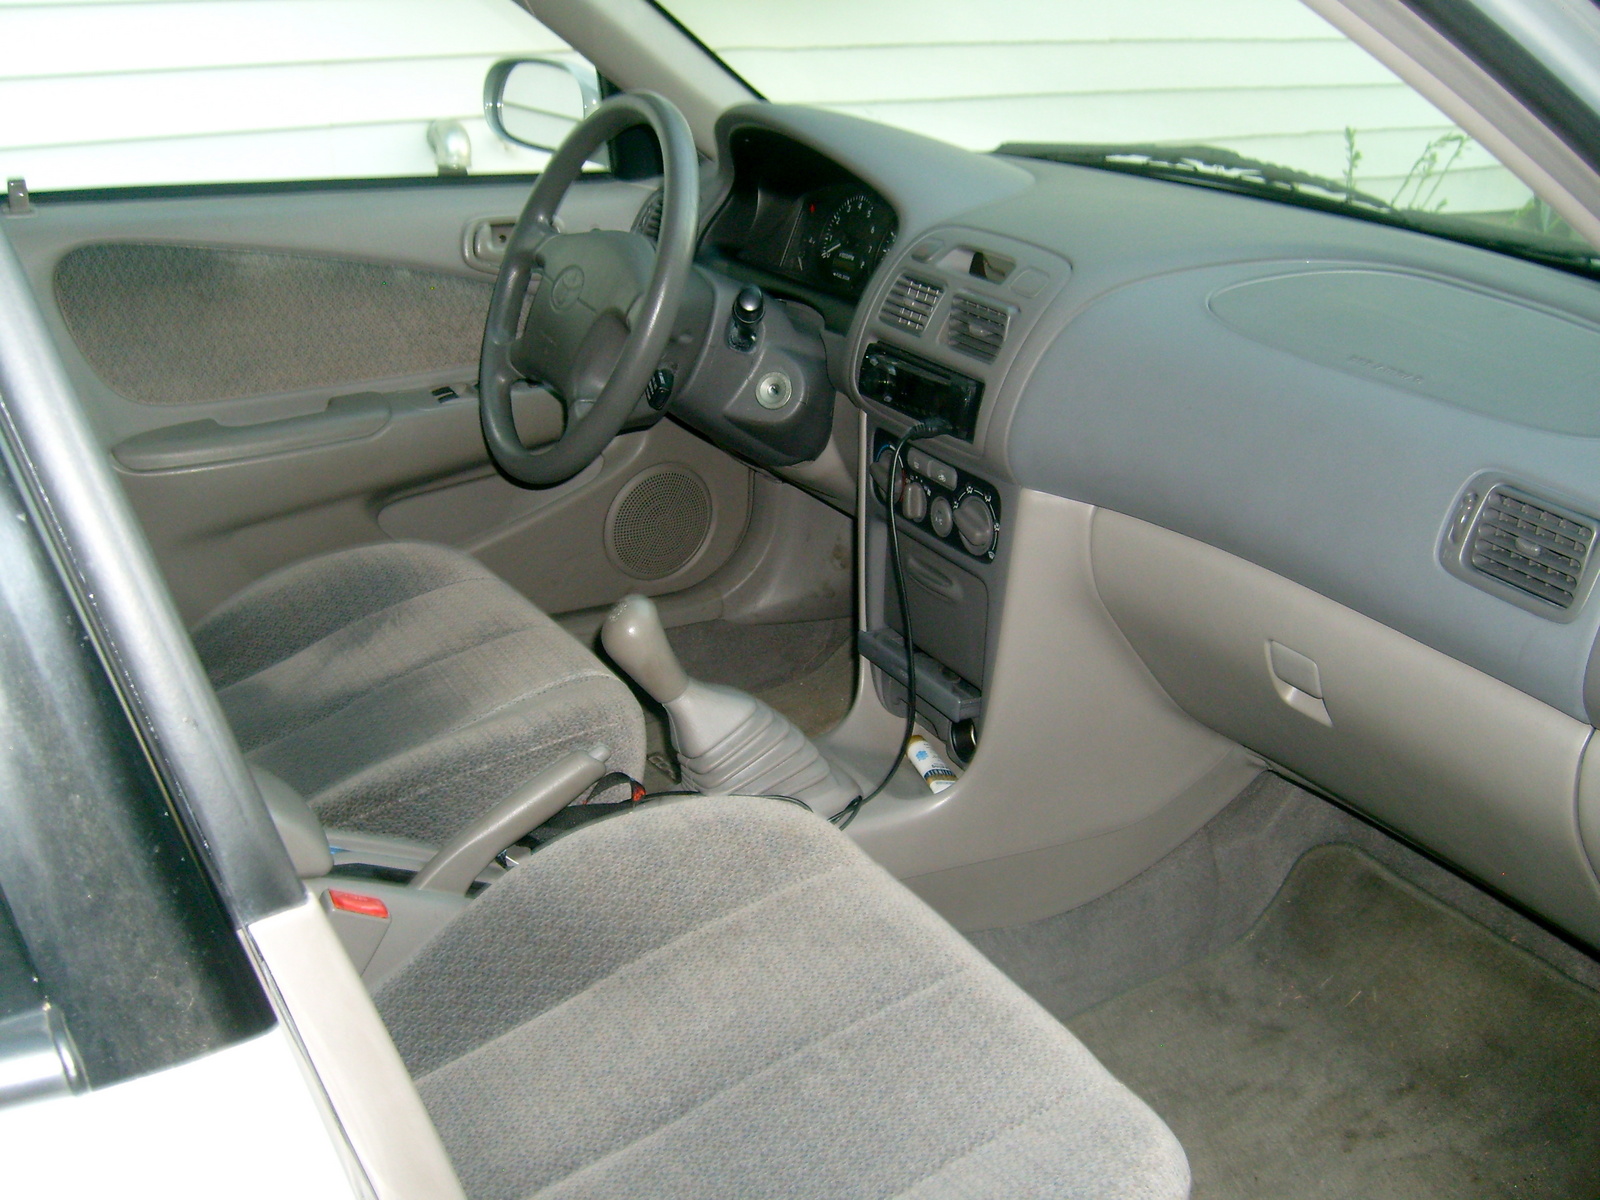 2002 corolla automatic interior doors handles